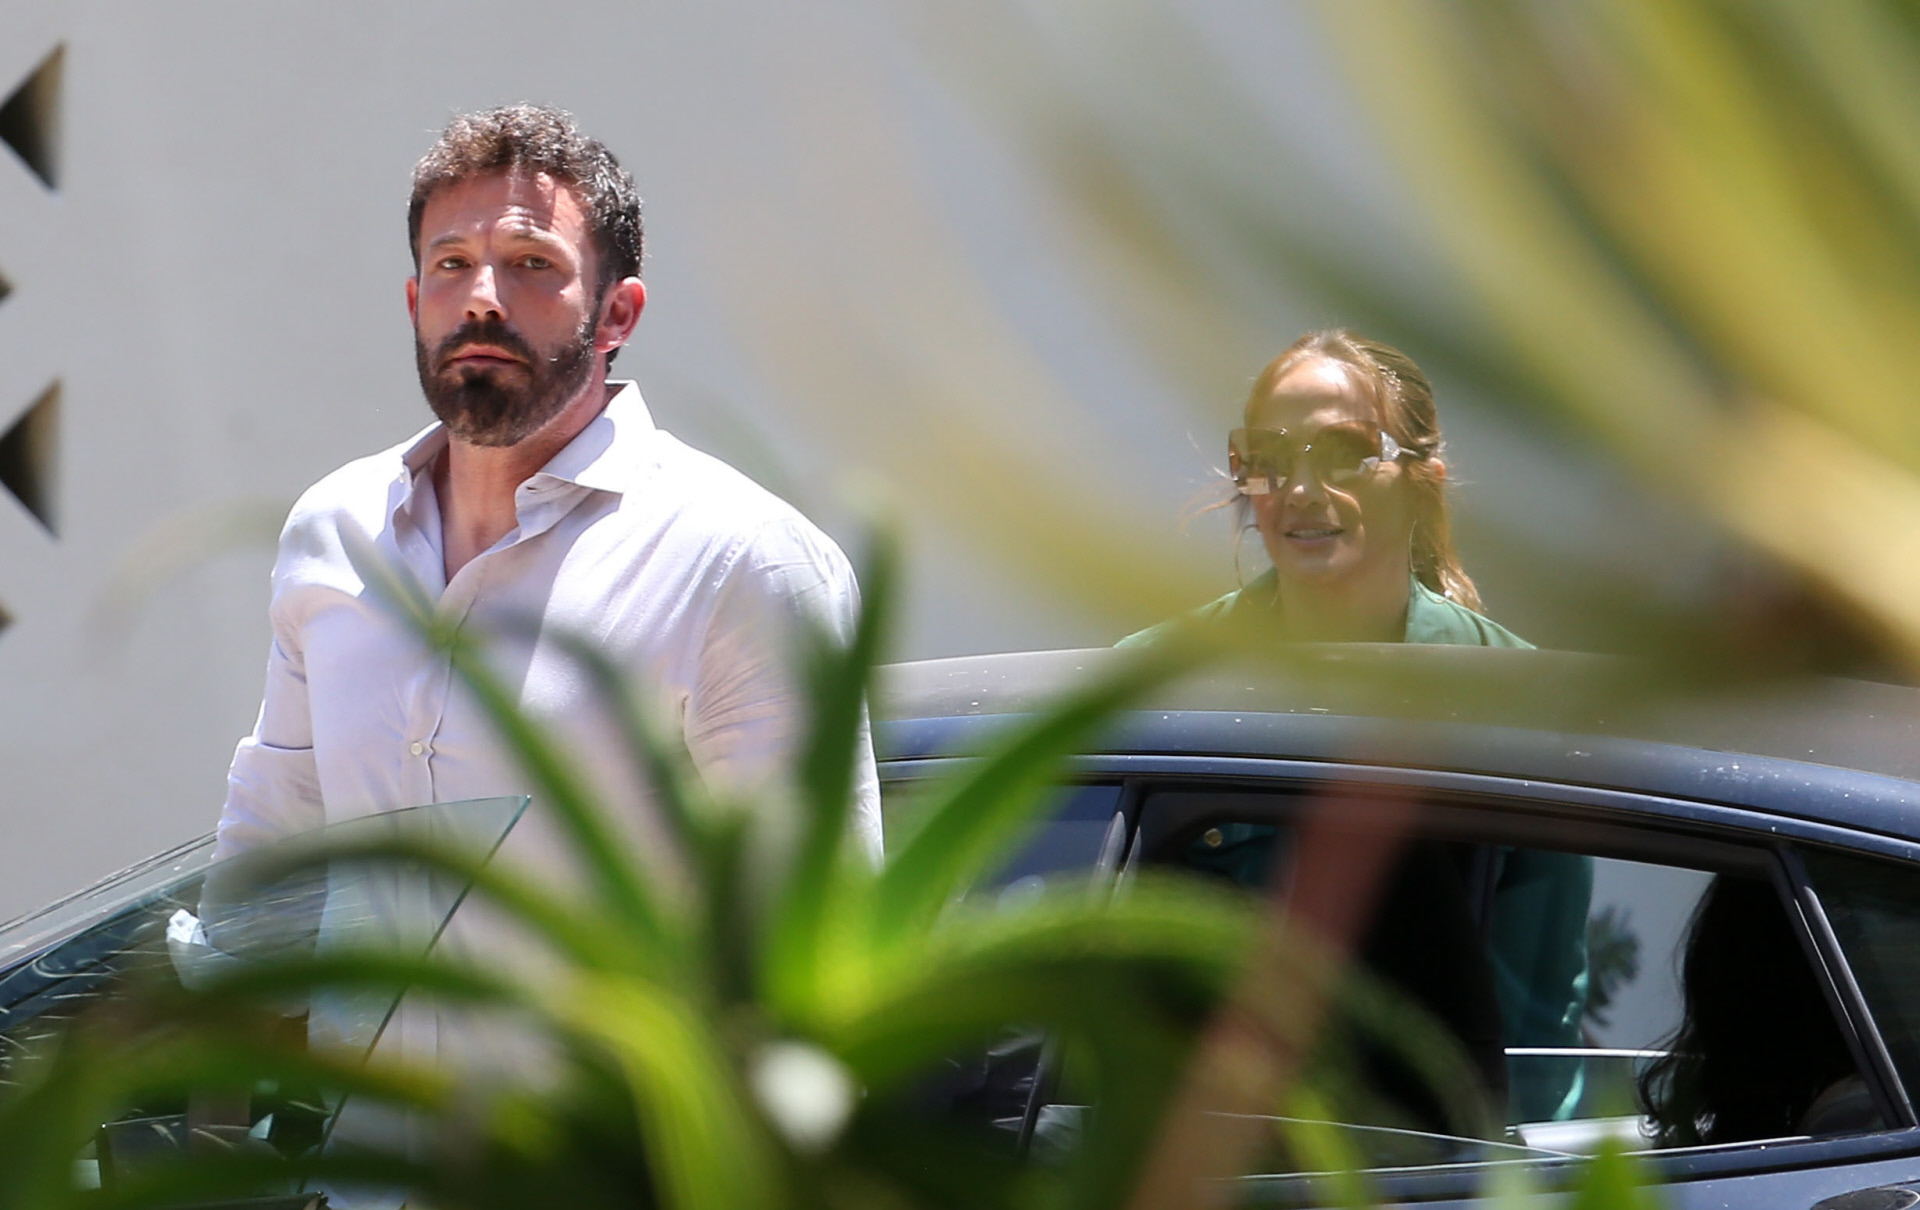 Ben Affleck and Jennifer Lopez, in a recent image.